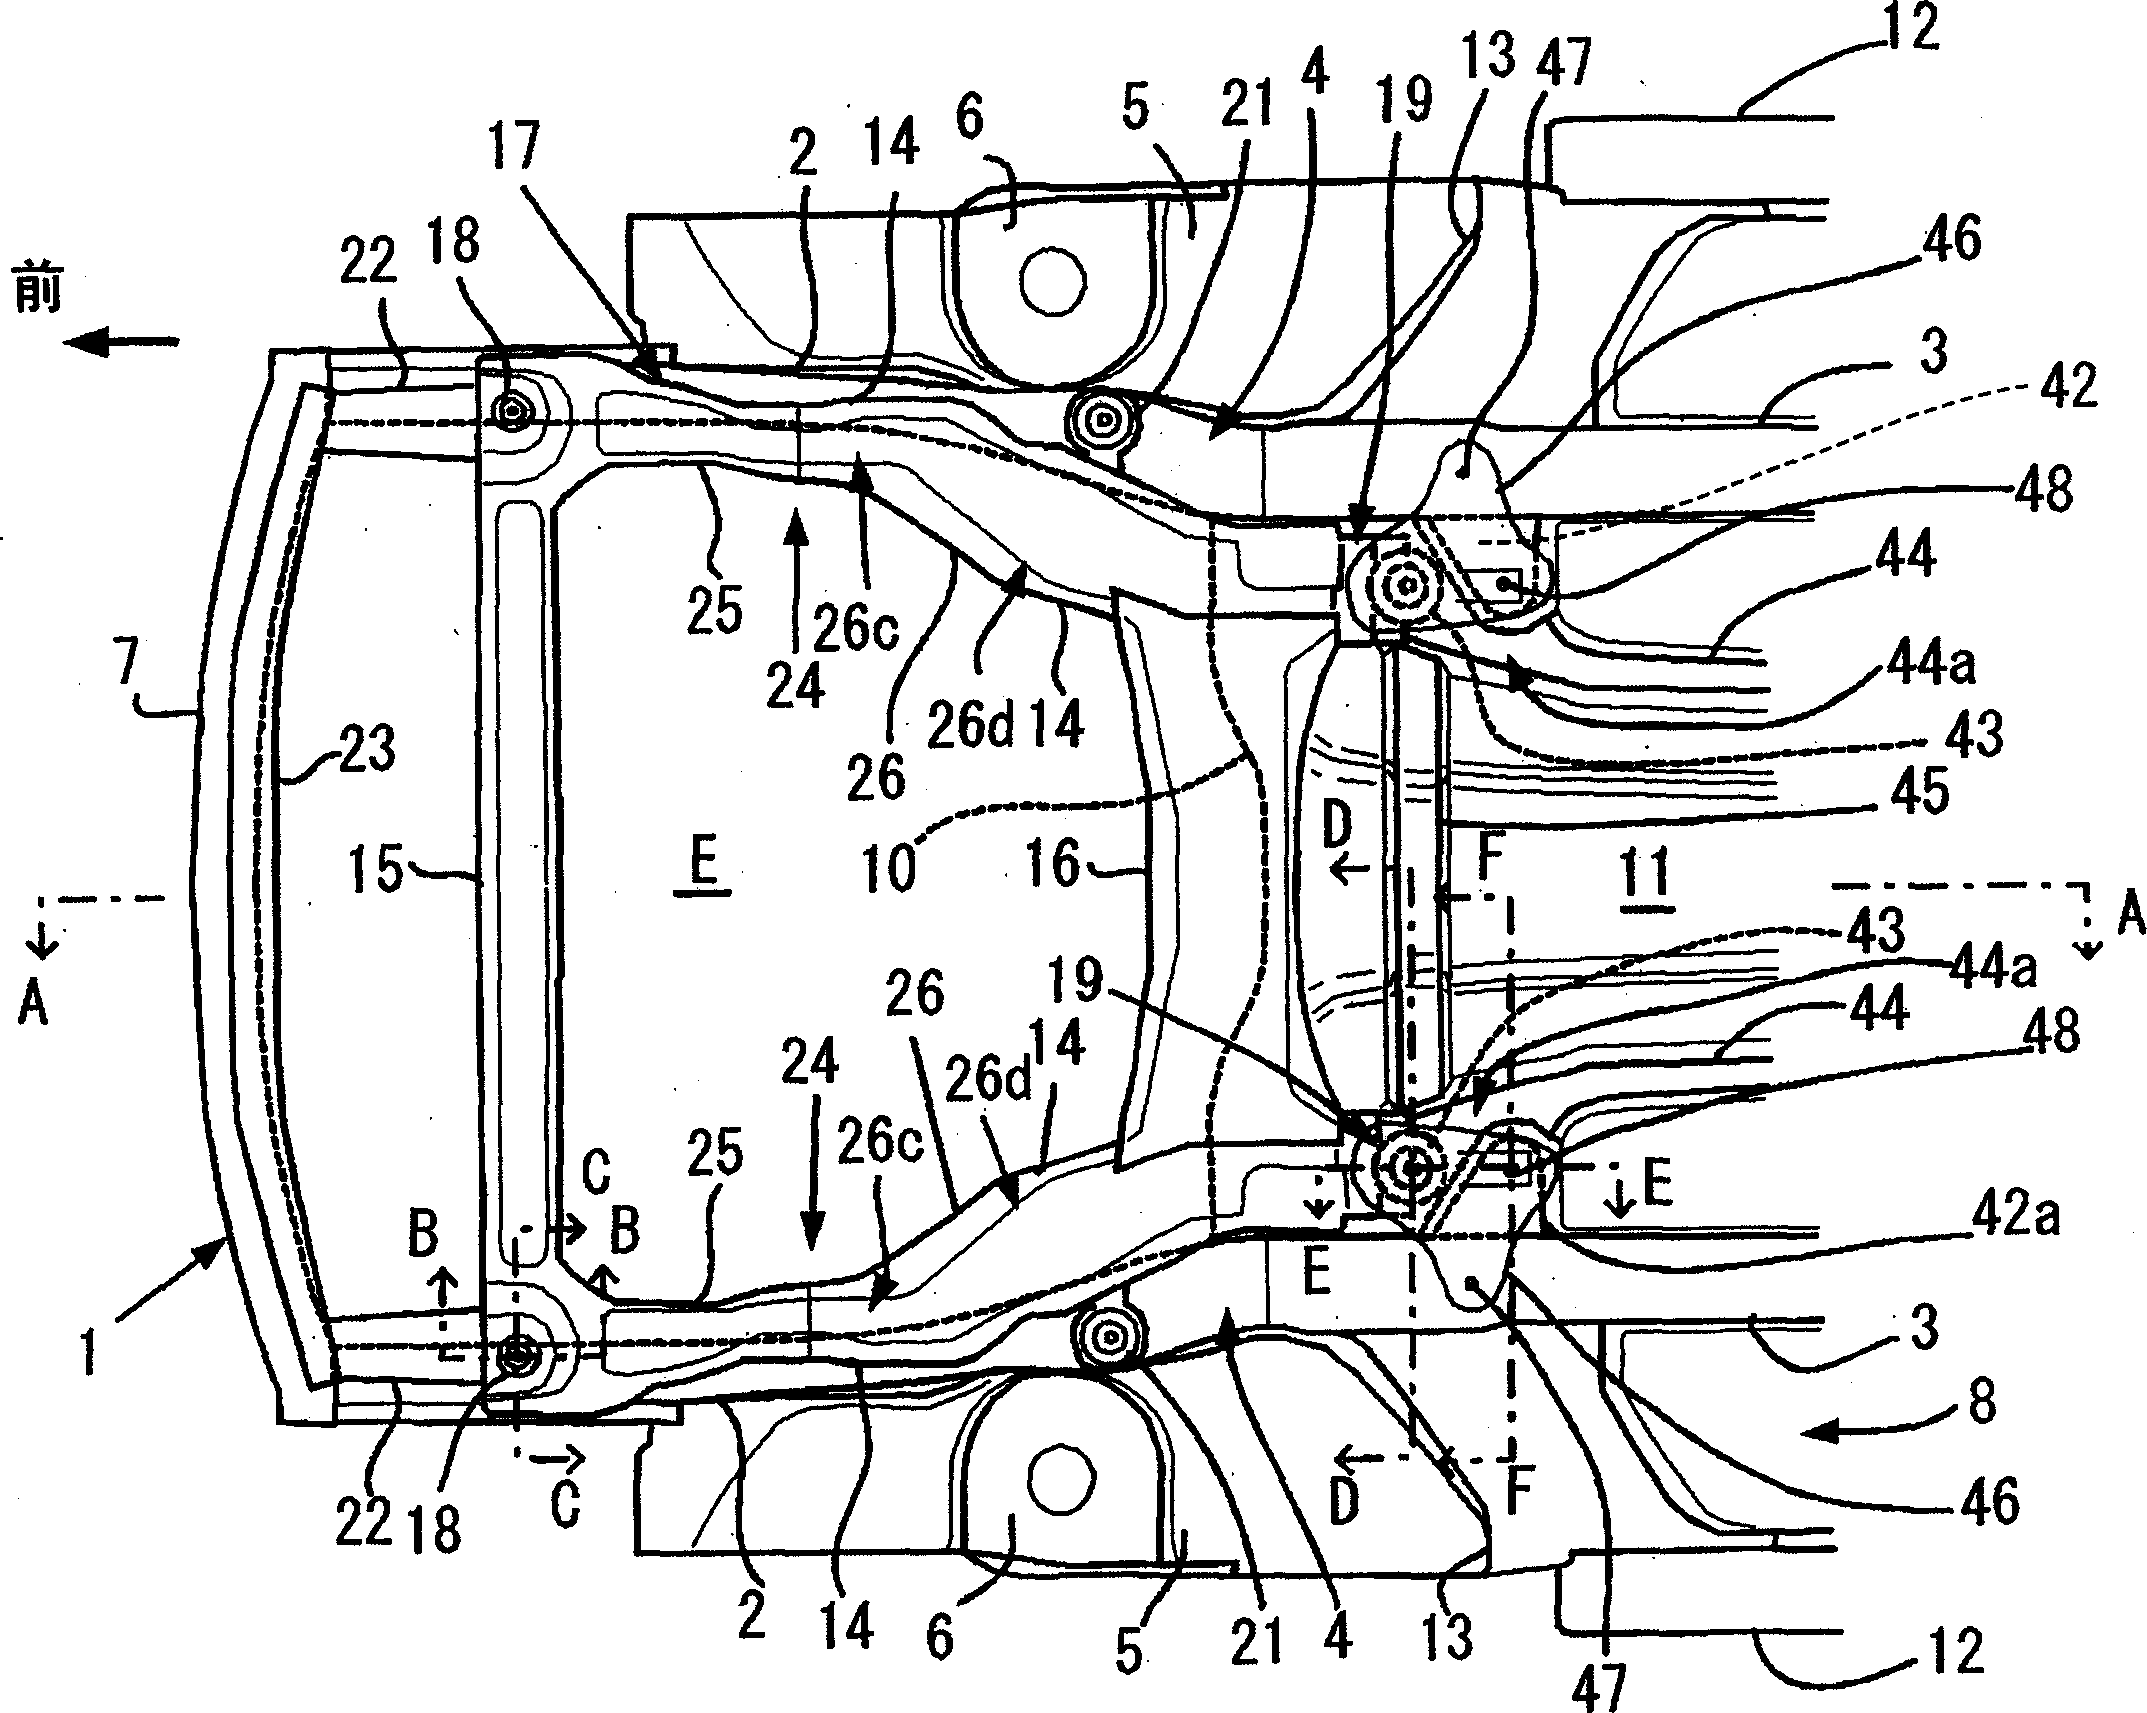 Vehicle front-part structure